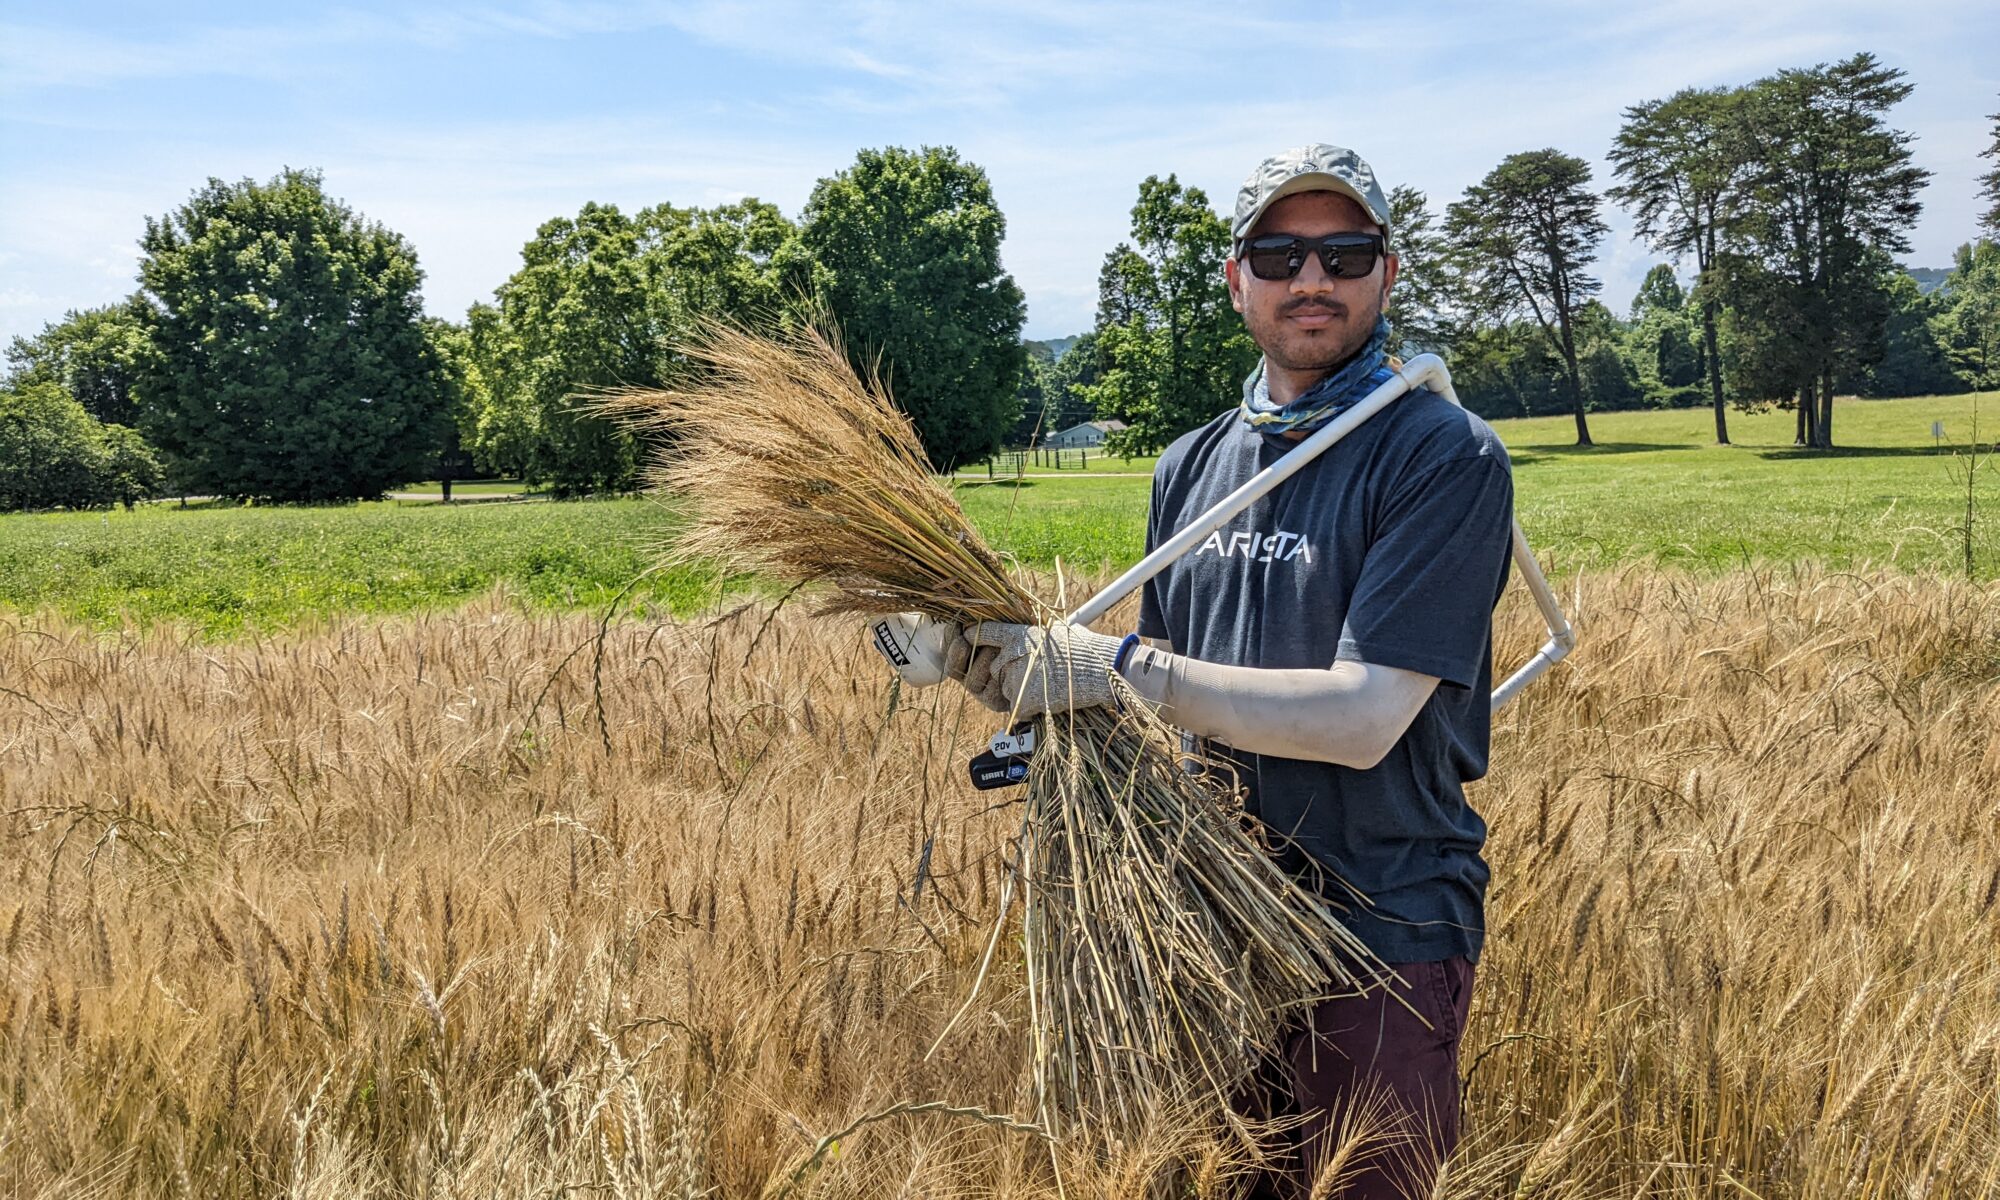 Ravi stands in wheat field holding a bushel of wheat